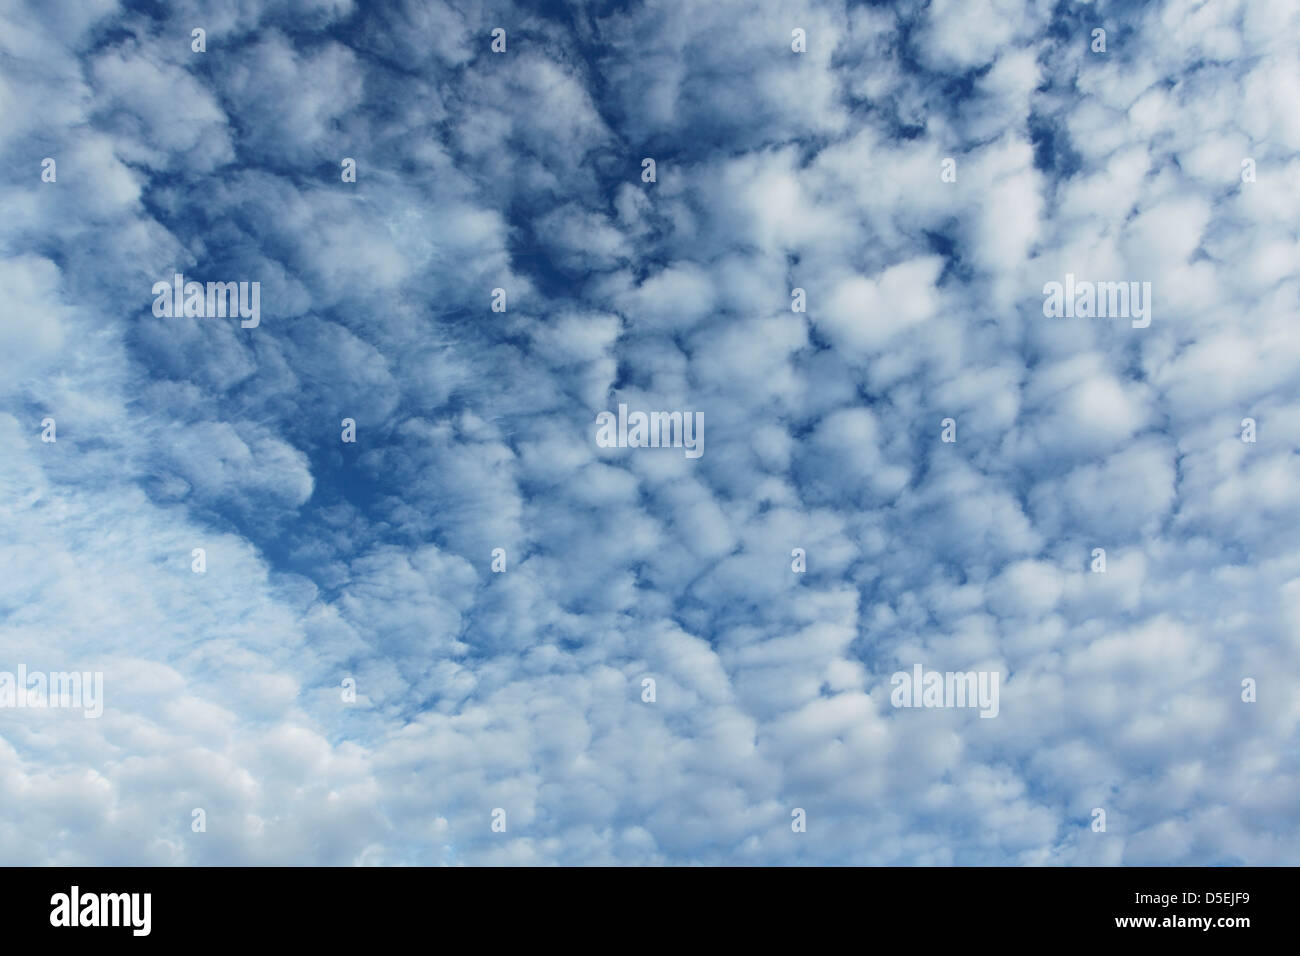 Altocumulus floccus cloud patterns of white globular cloud forms against a blue sky Stock Photo